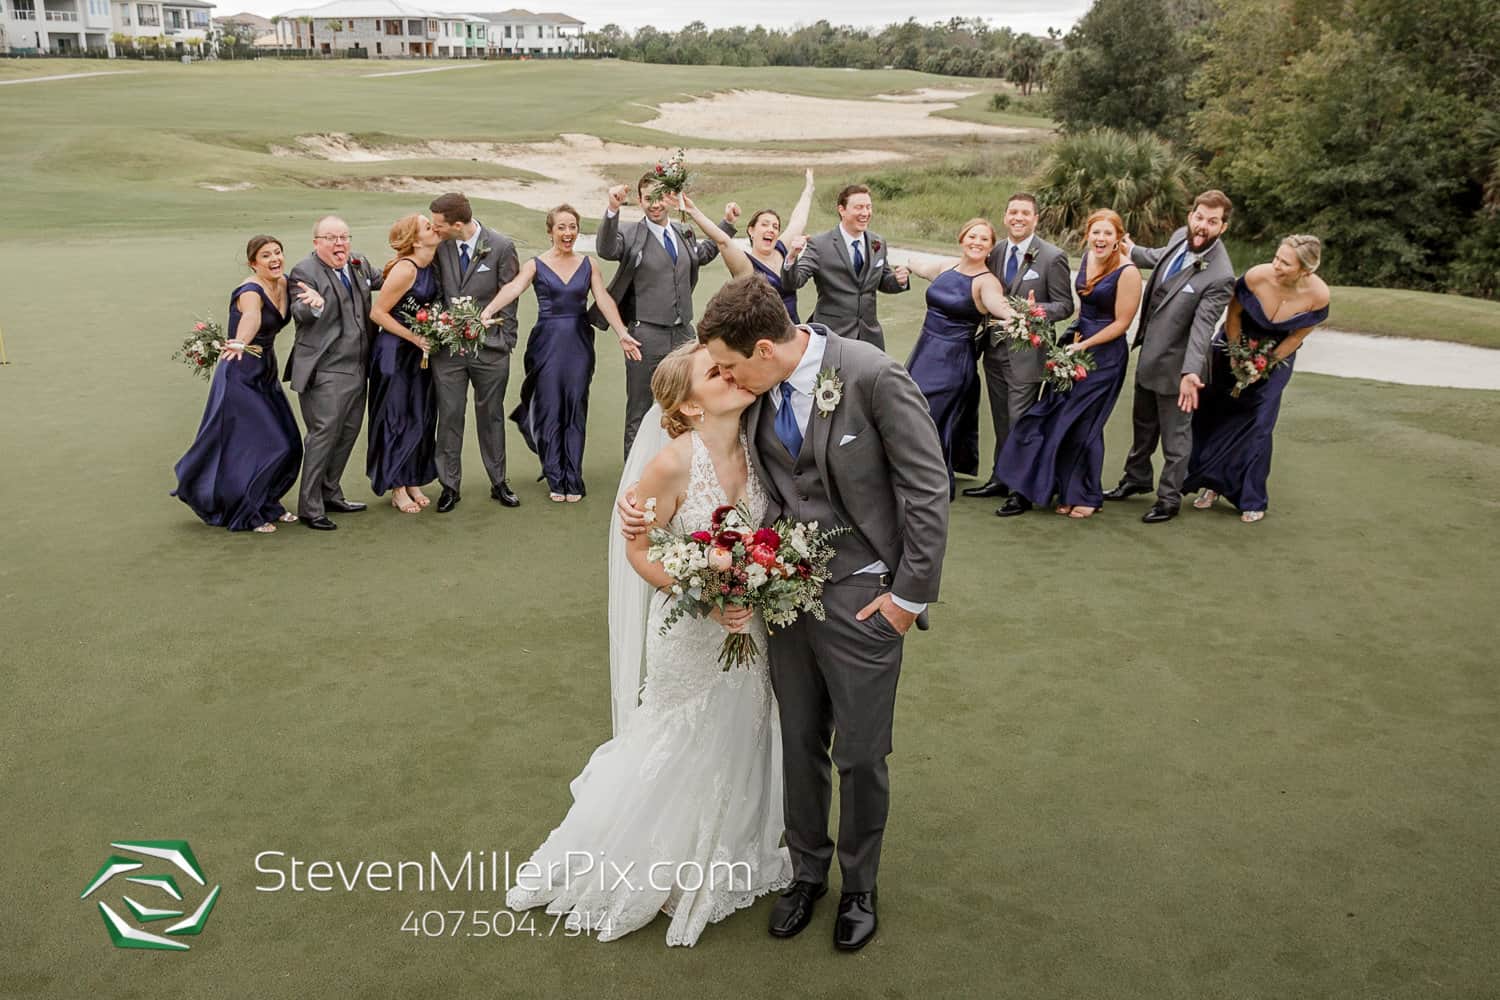 November Wedding - Just Marry Weddings - Steven Miller Photography - Wedding Party